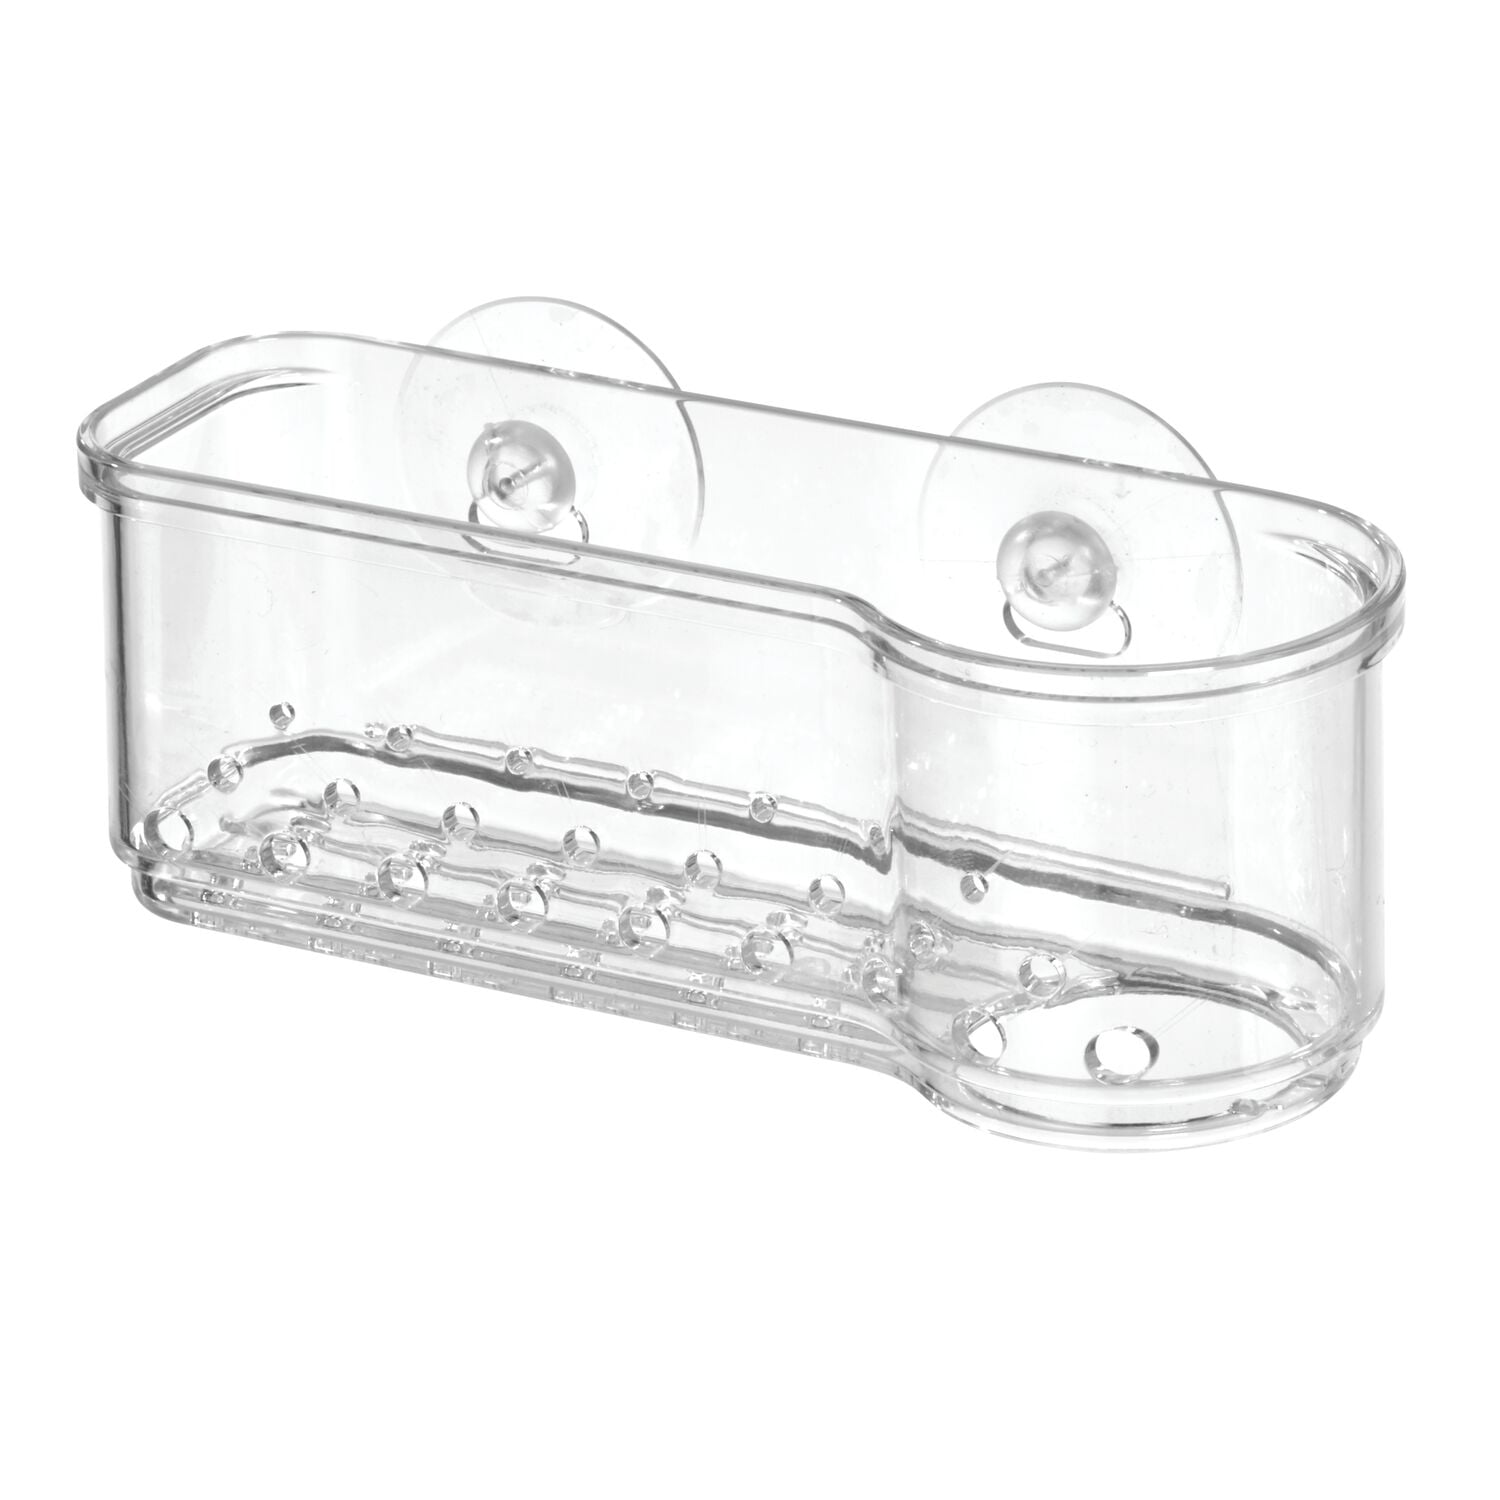 iDesign Crisp Plastic Sink Suction Holder, Clear, 6.75" x 2.83" x 2.77"